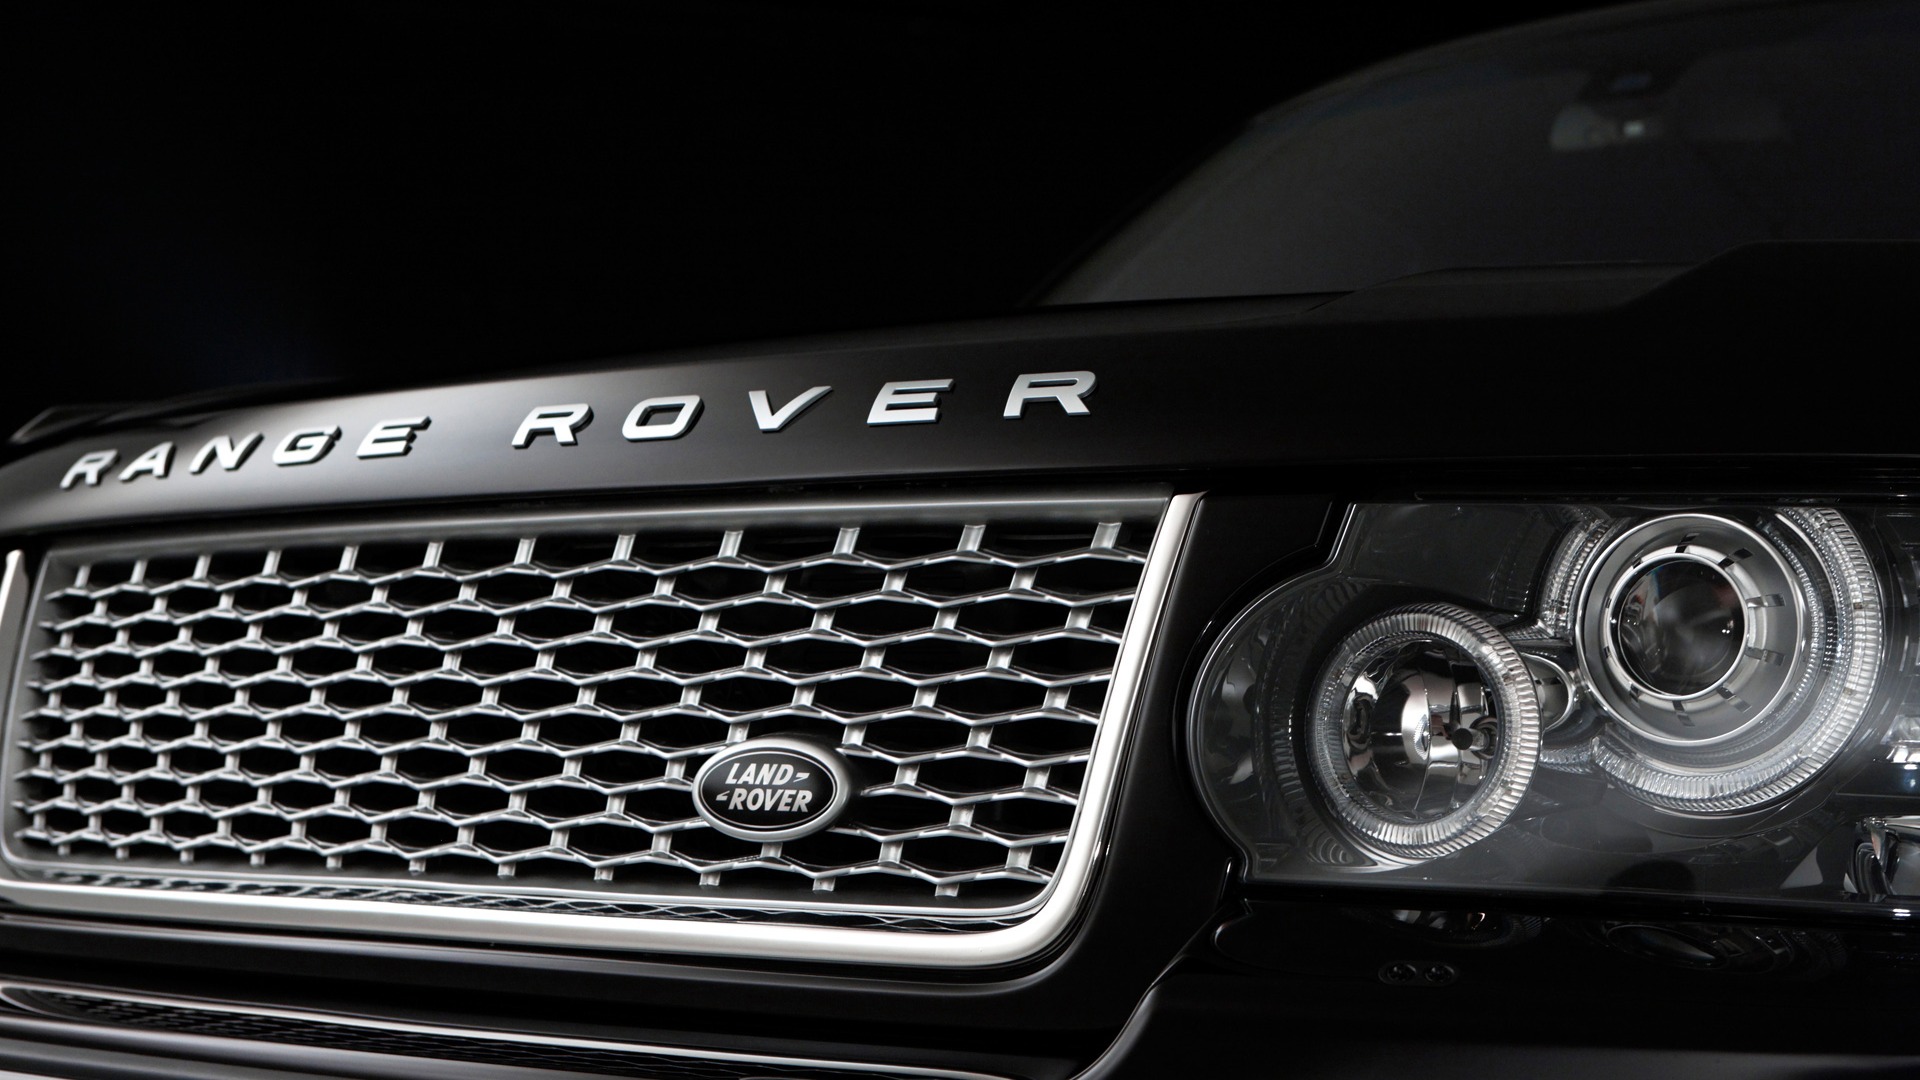 Land Rover Range Rover Black Edition - 2011 路虎21 - 1920x1080